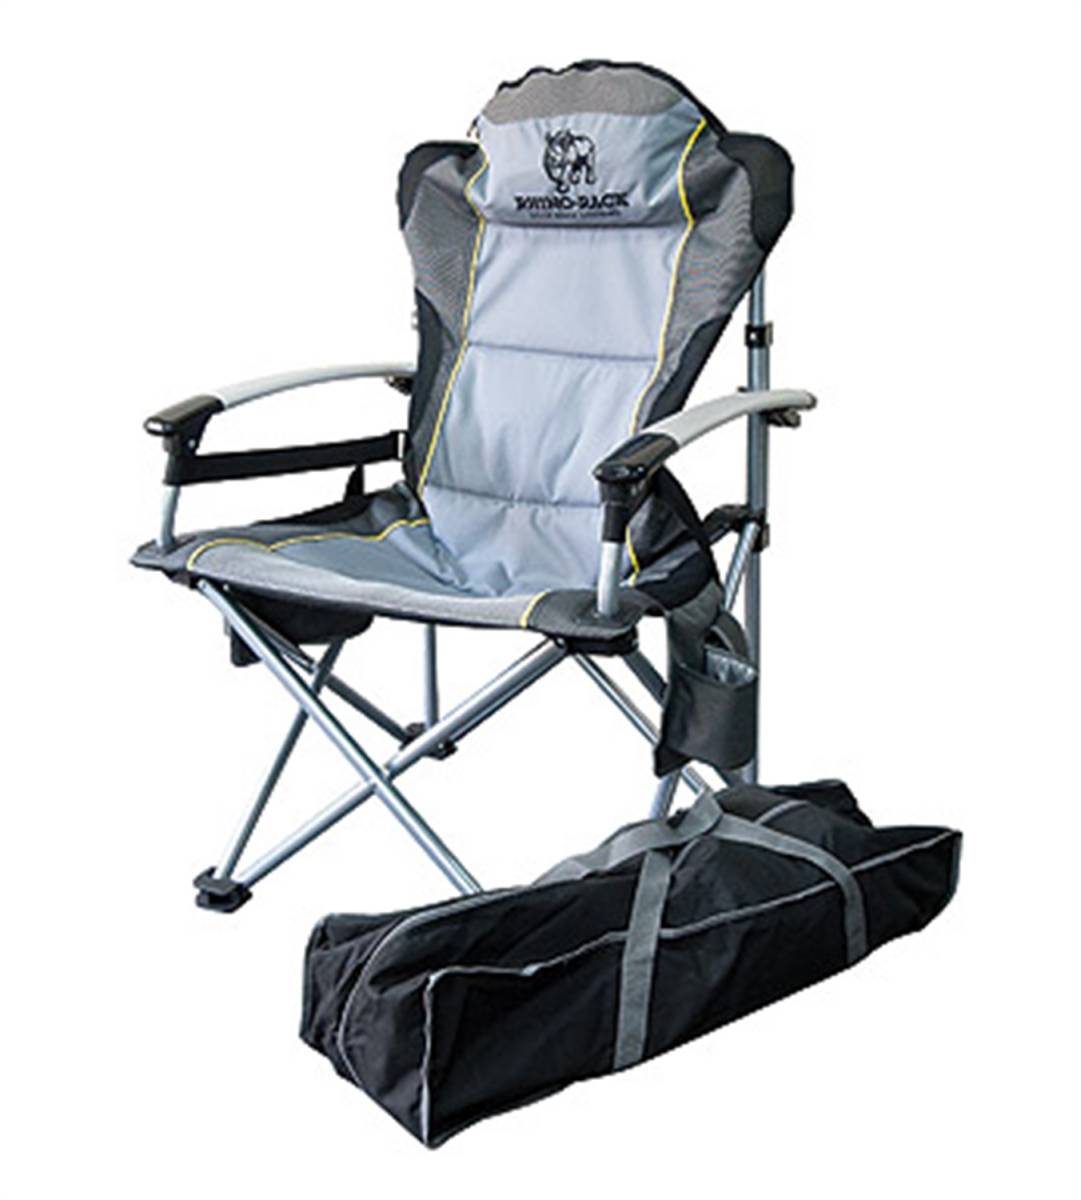 Rhino Rack Camping Chair